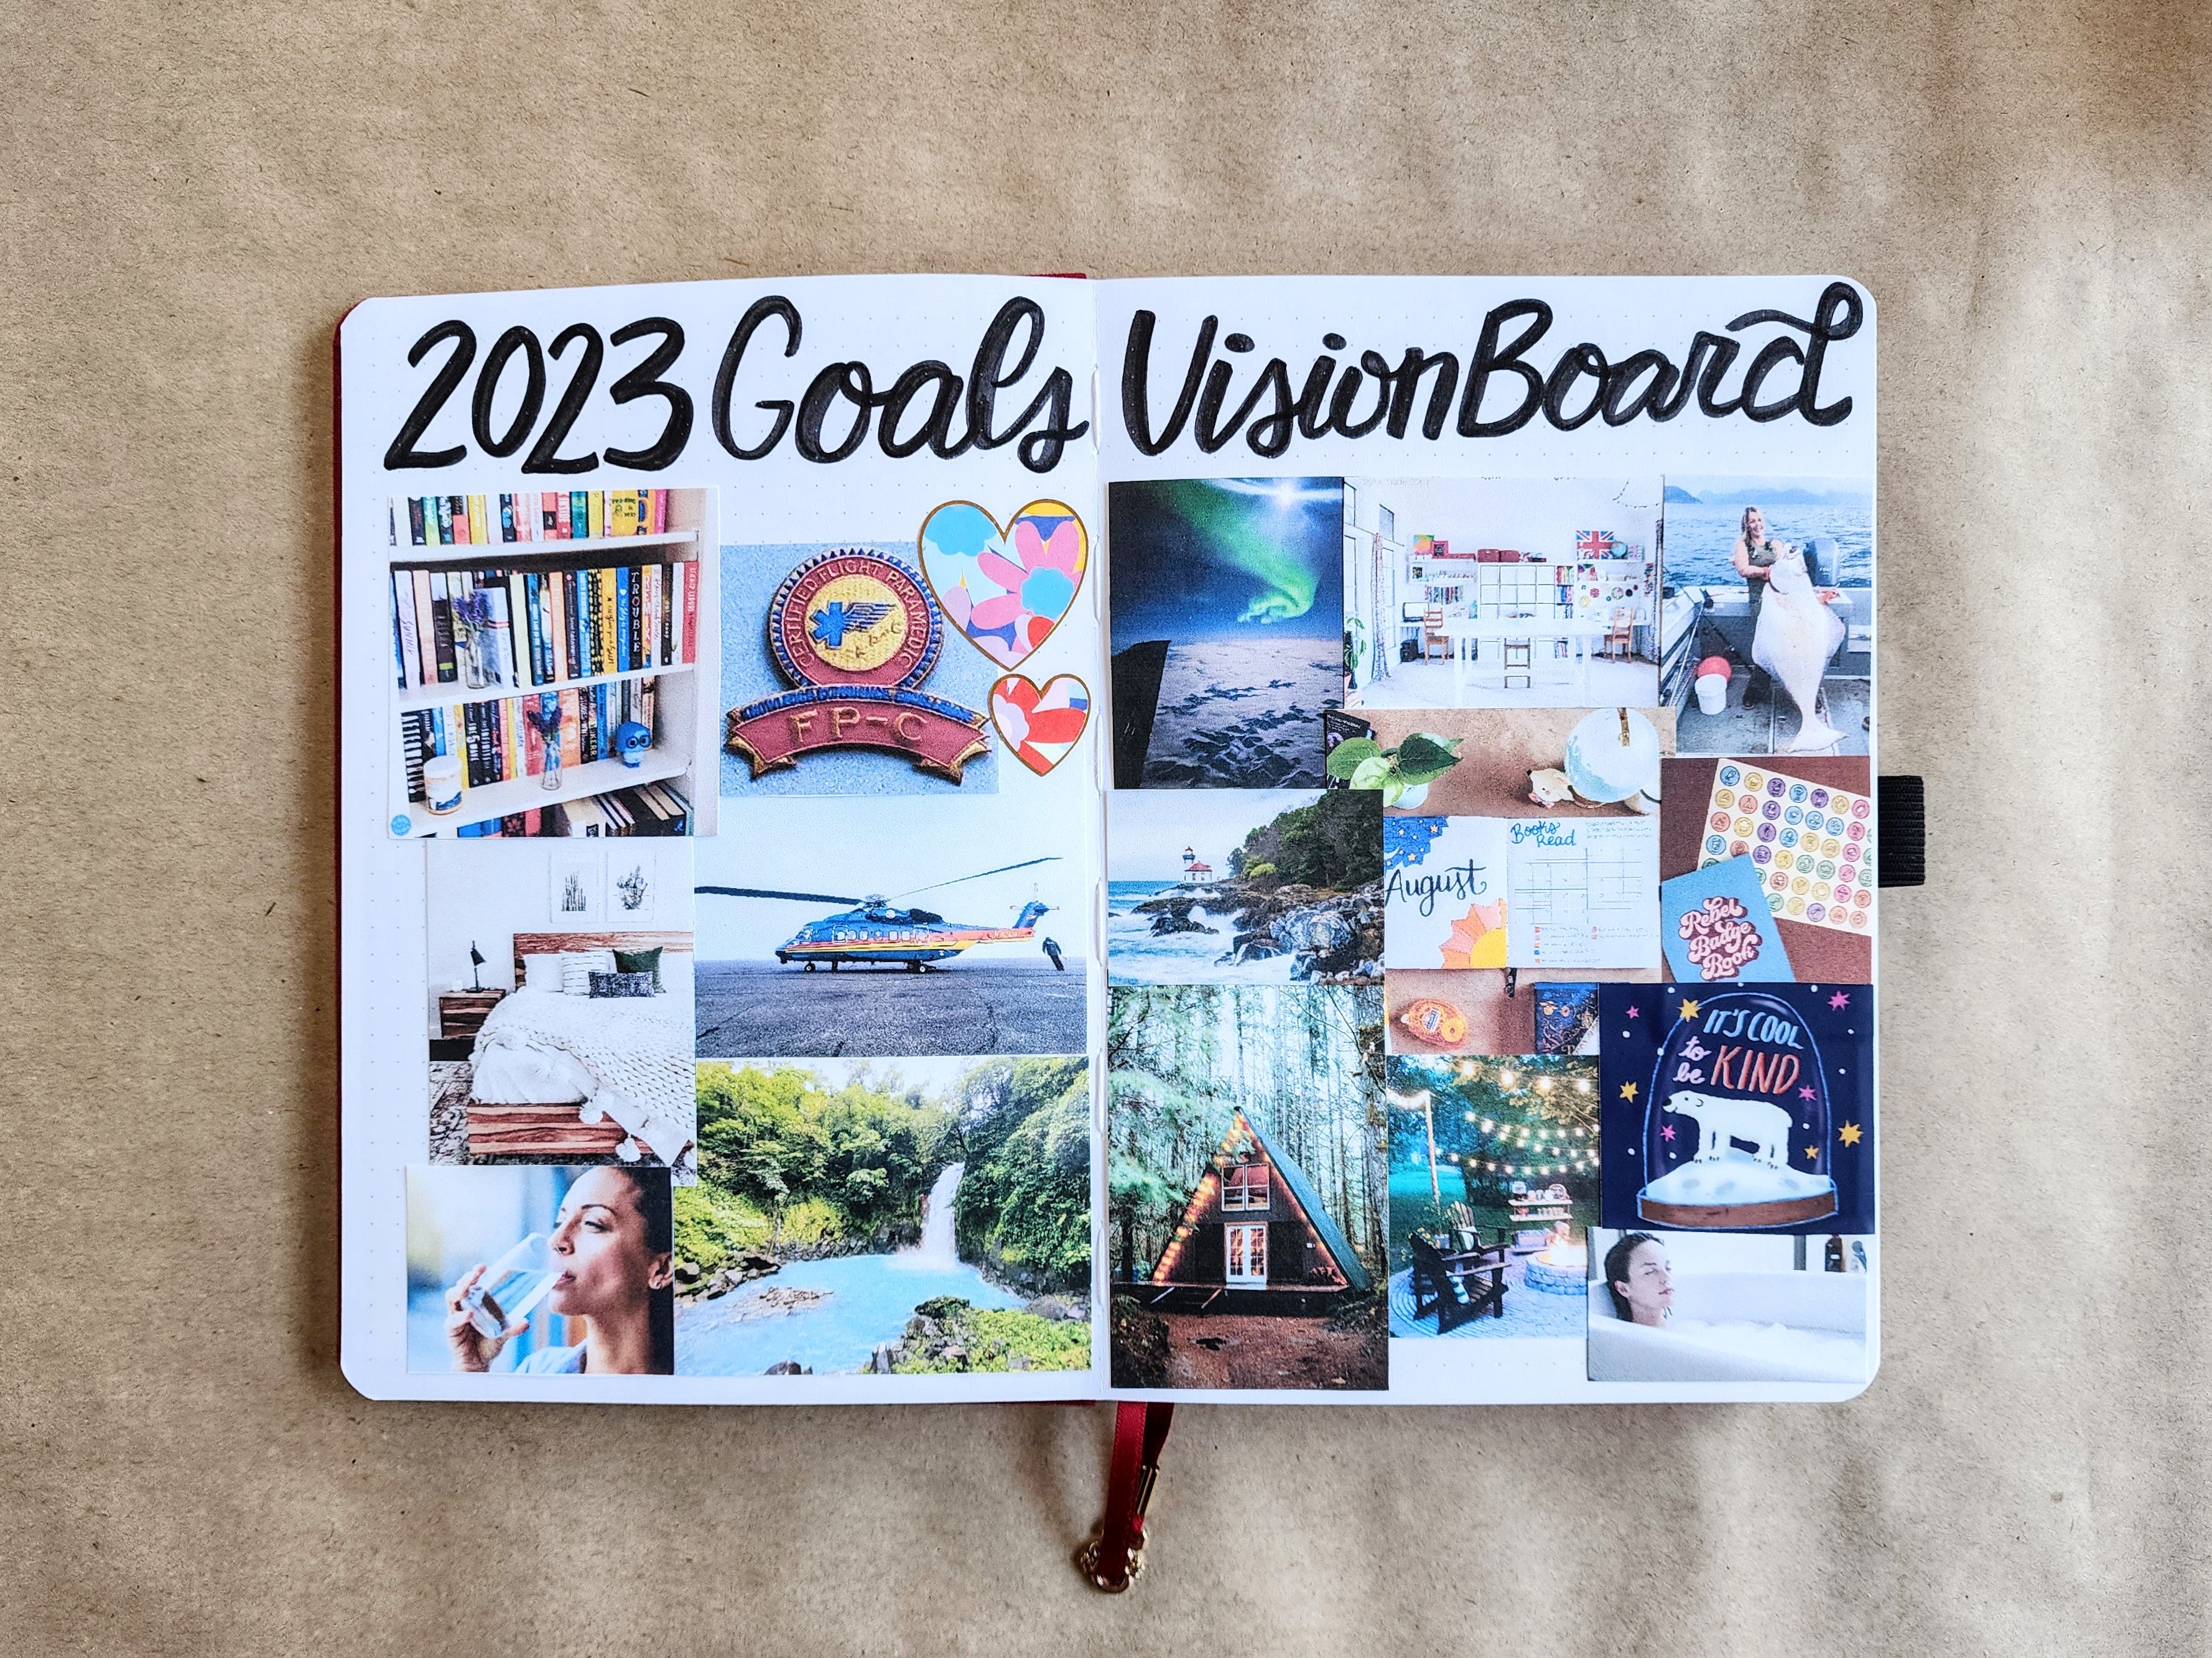 Goal Setting:  Making a goals vision board